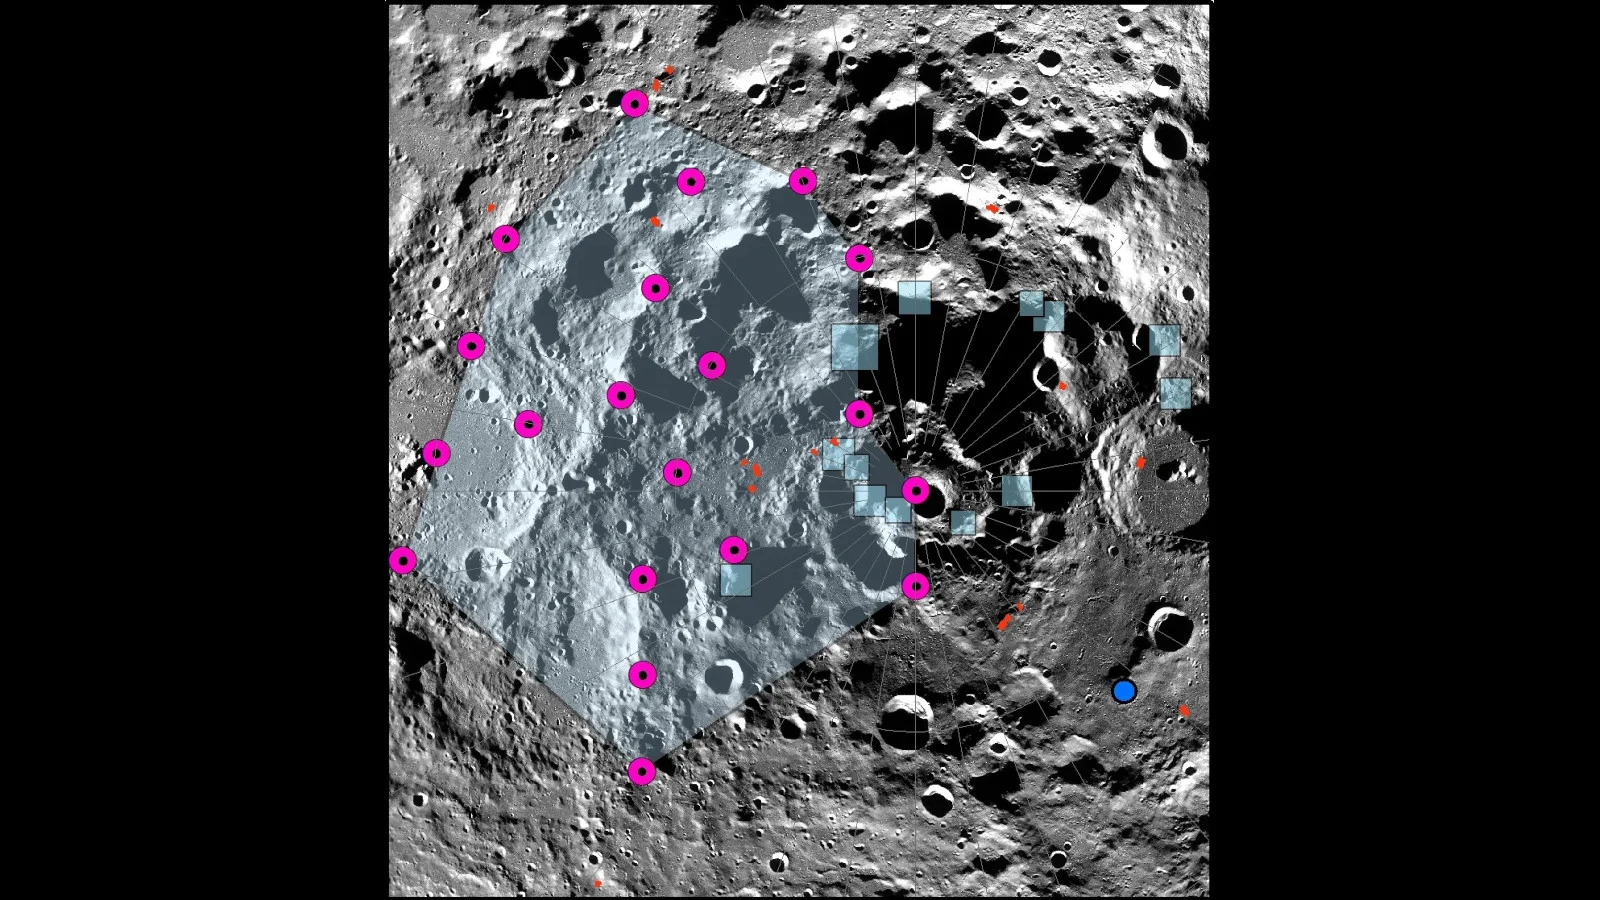 Moon south pole moonquake location vs Artemis 3 landing sites - NASA